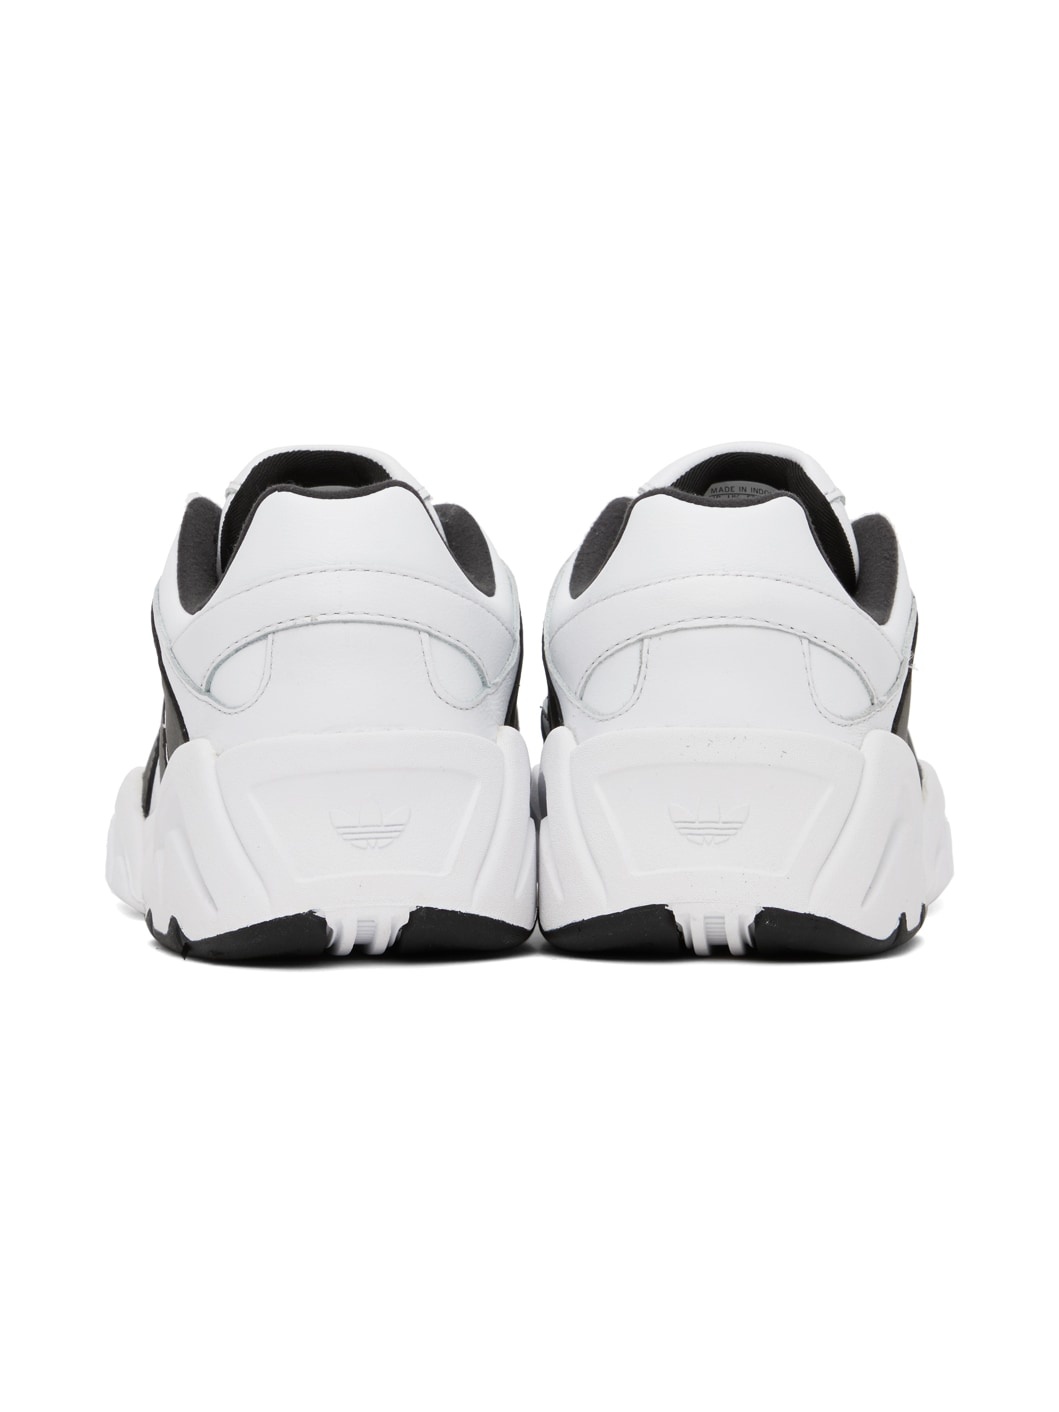 White & Black Predator XLG Sneakers - 2